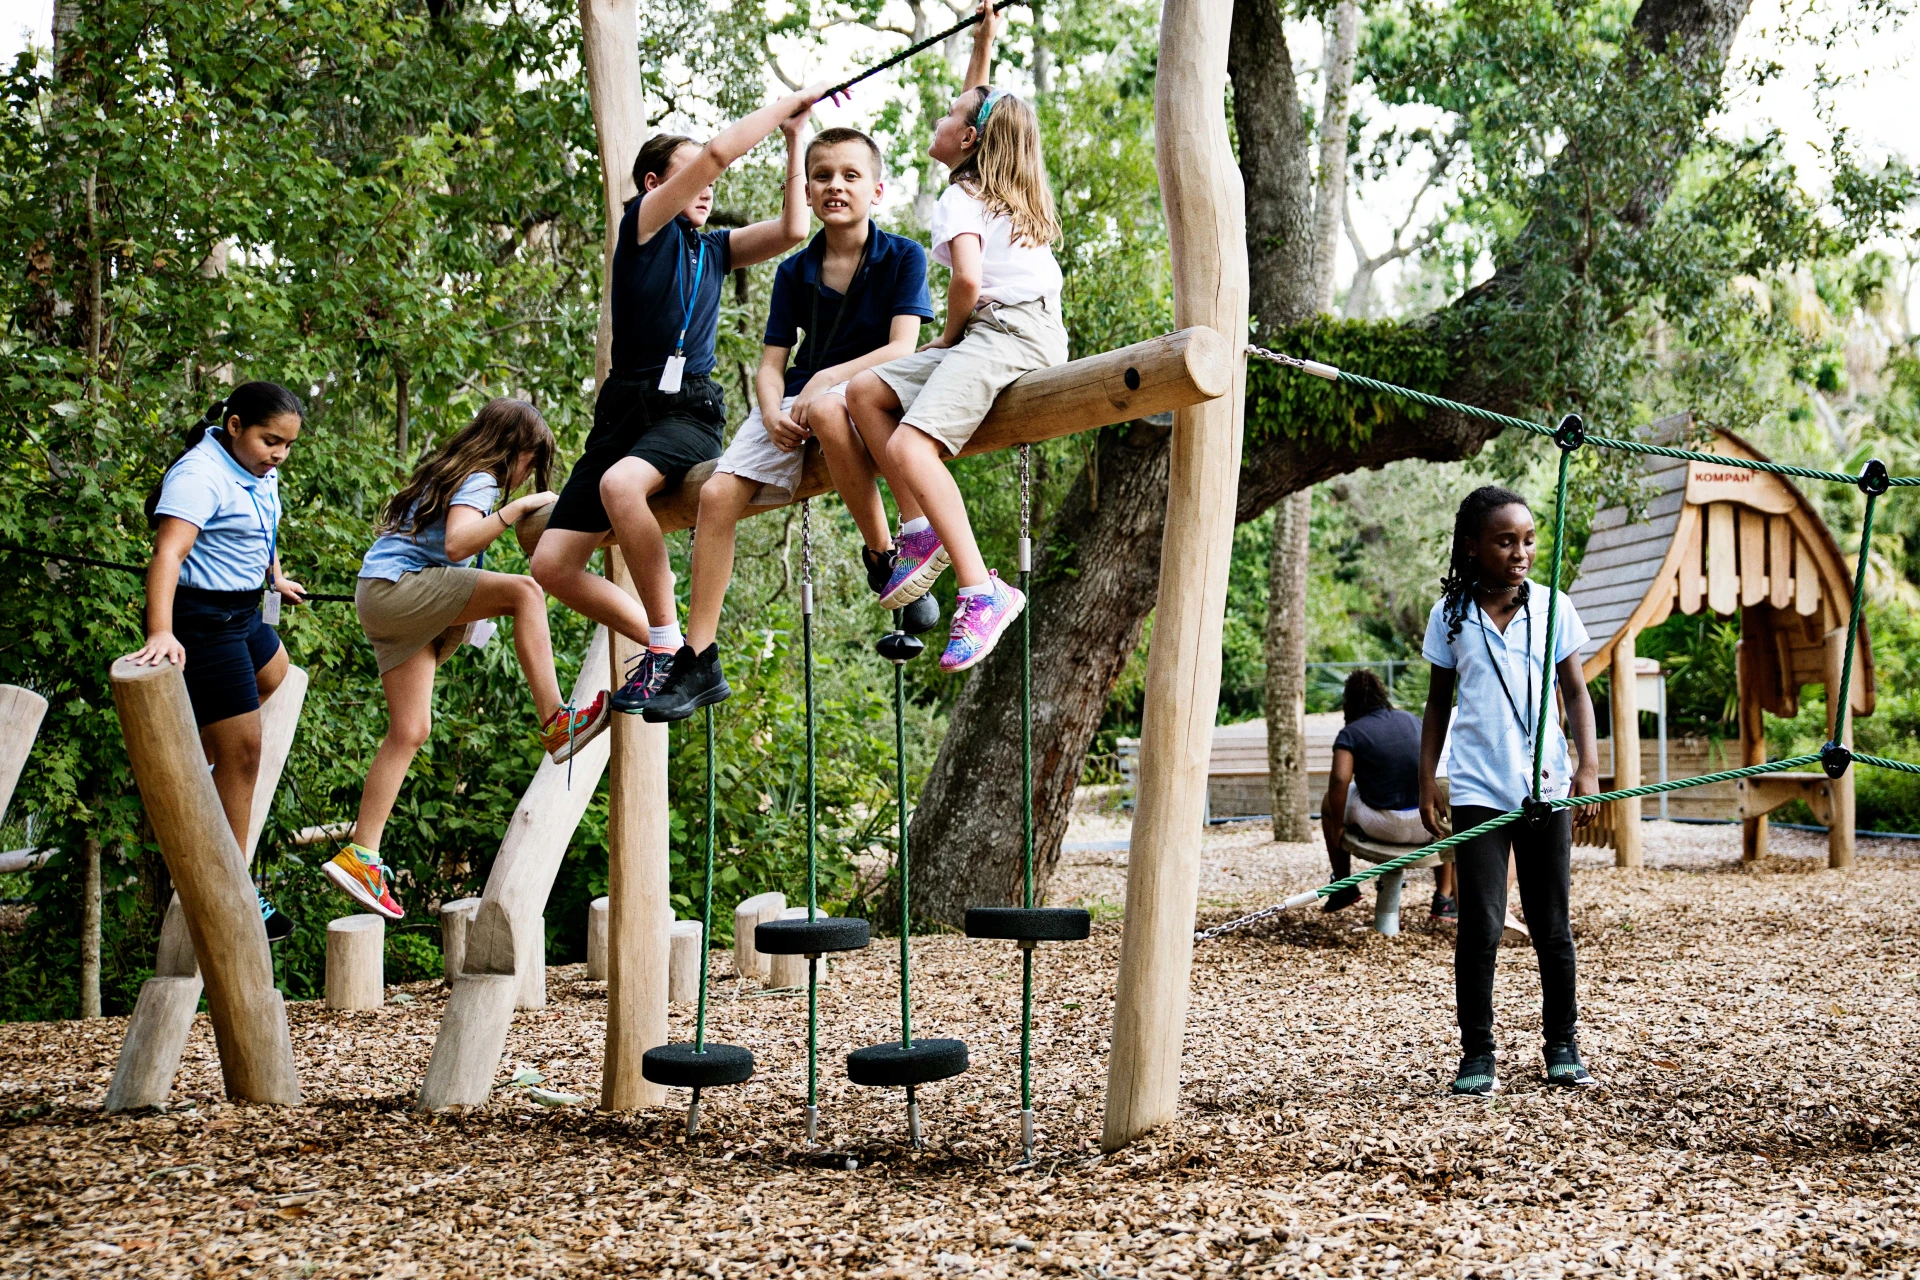 Adventurous children climbing over natural playground structures